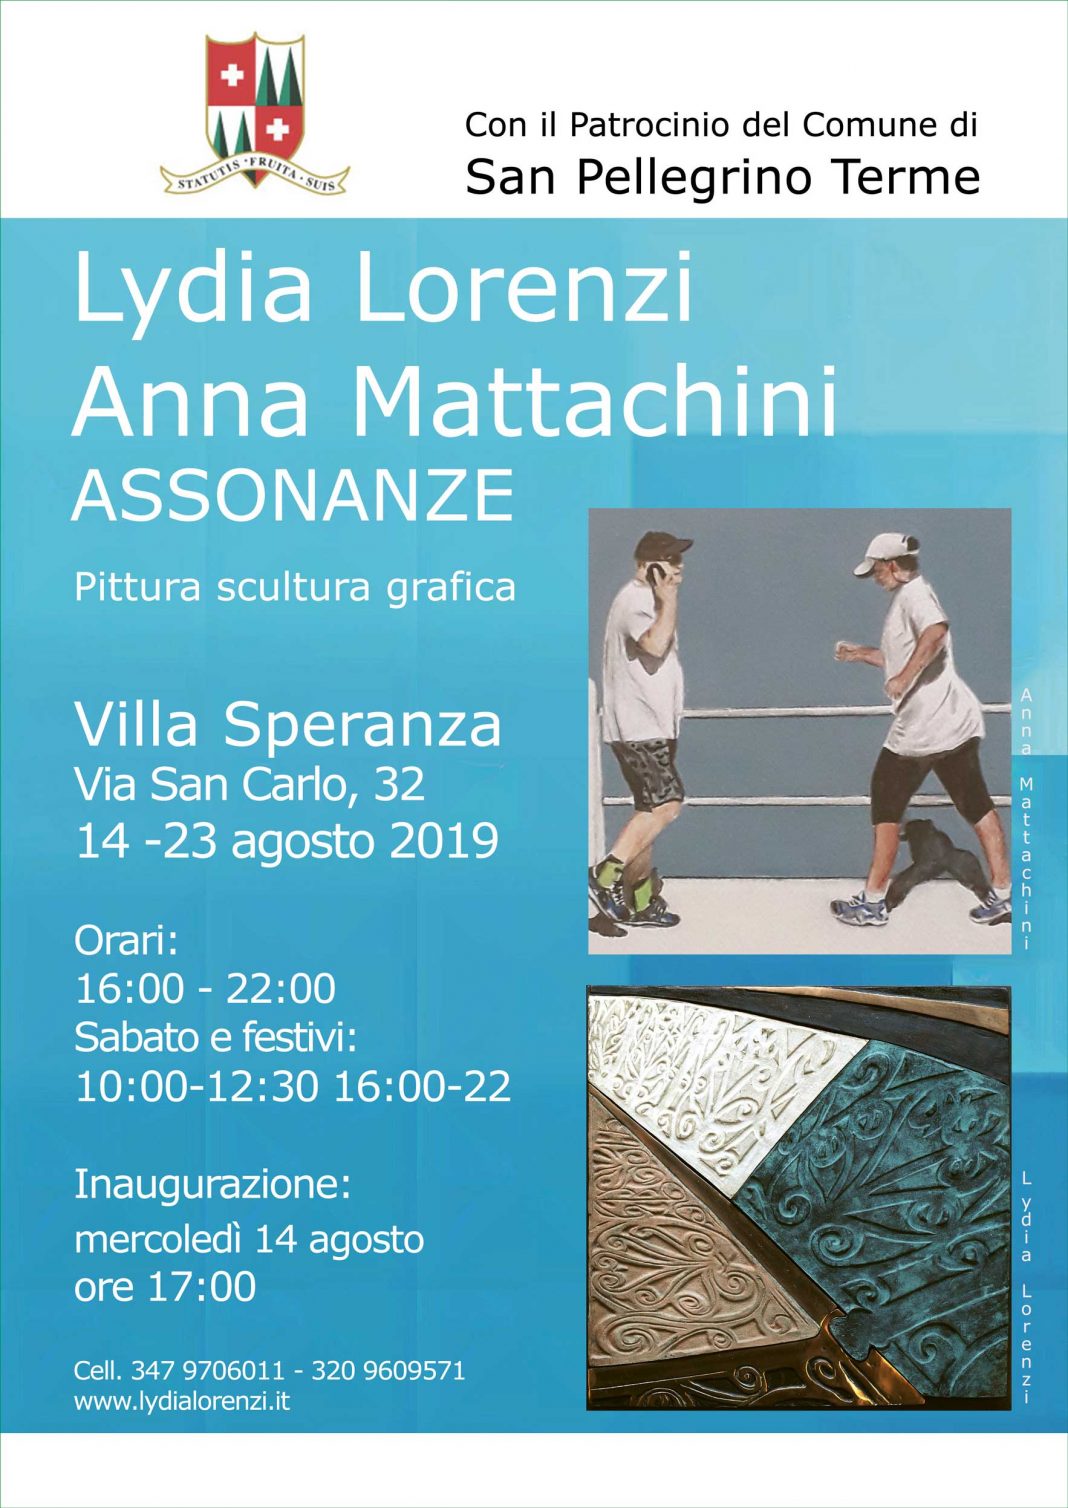 Lydia Lorenzi / Anna Mattachini – Assonanzehttps://www.exibart.com/repository/media/formidable/11/Manifesto-Assonanze-1-2-1068x1508.jpg